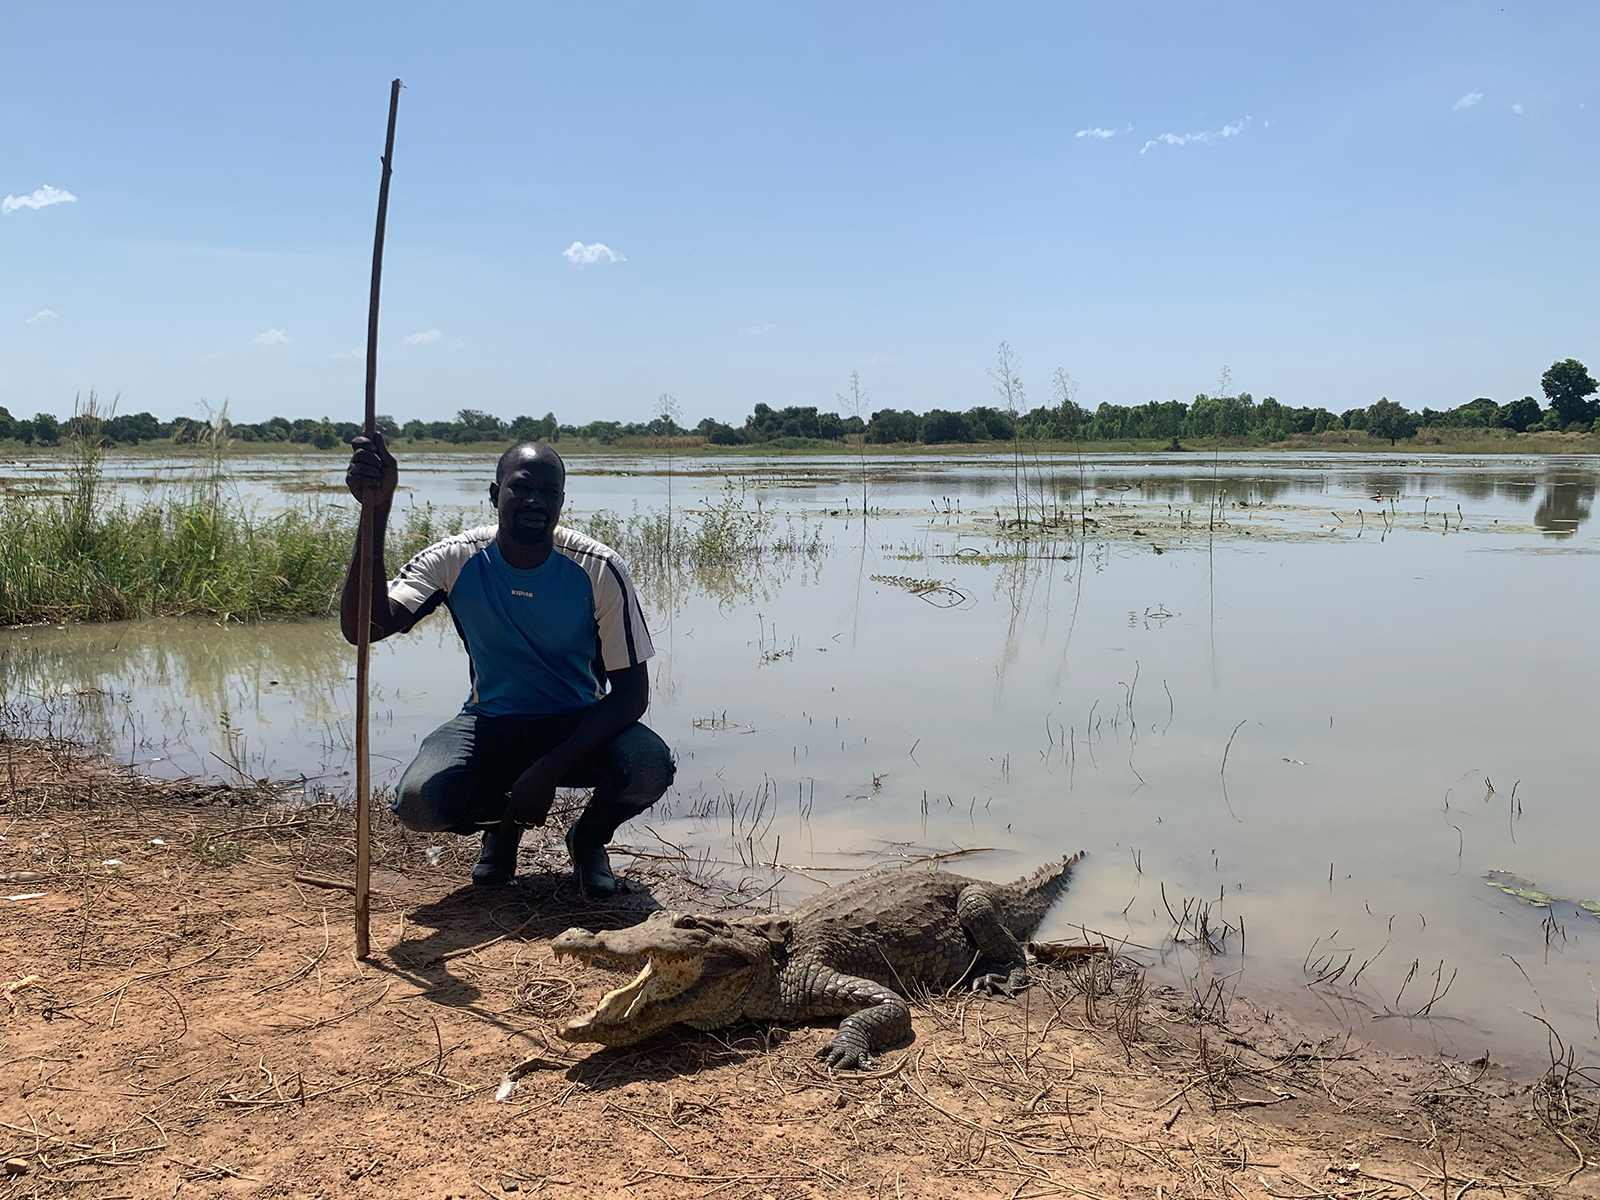 Pierre Kaboré poses with a sacred crocodile in Bazoulé, Burkina Faso, Oct. 17, 2021. RNS photo by Joseph Hammond